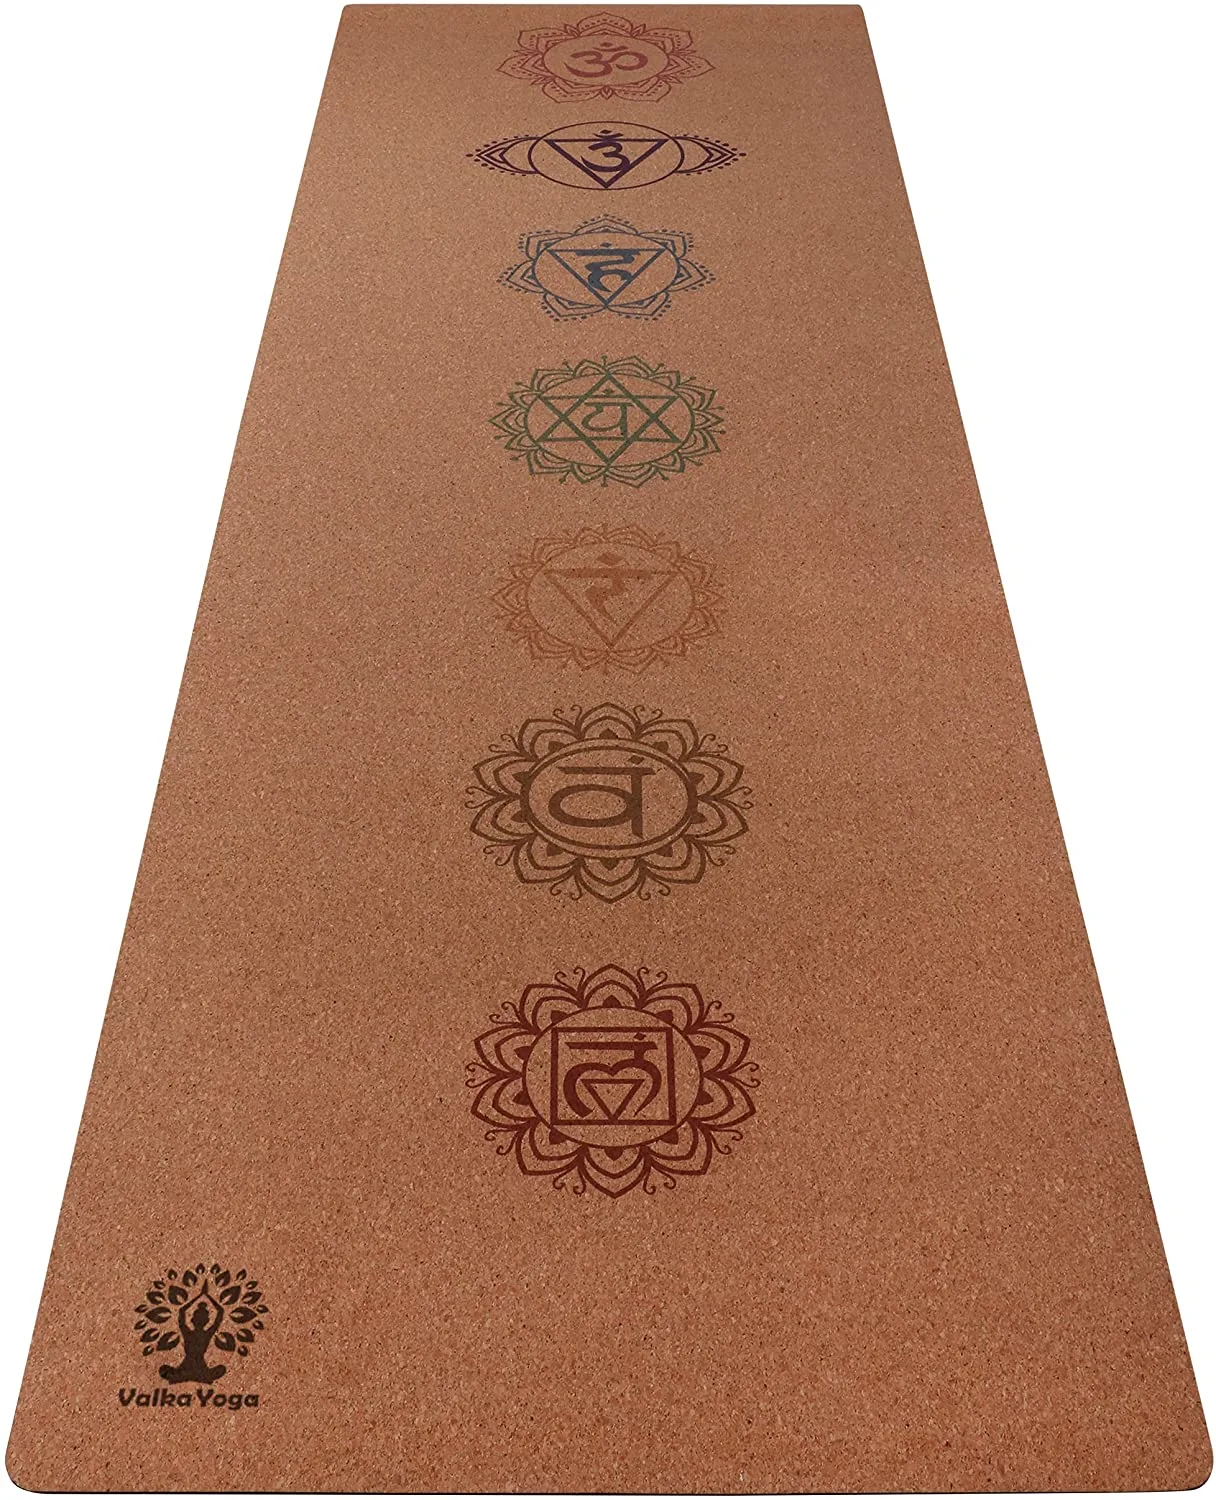 customized yoga mats with logo